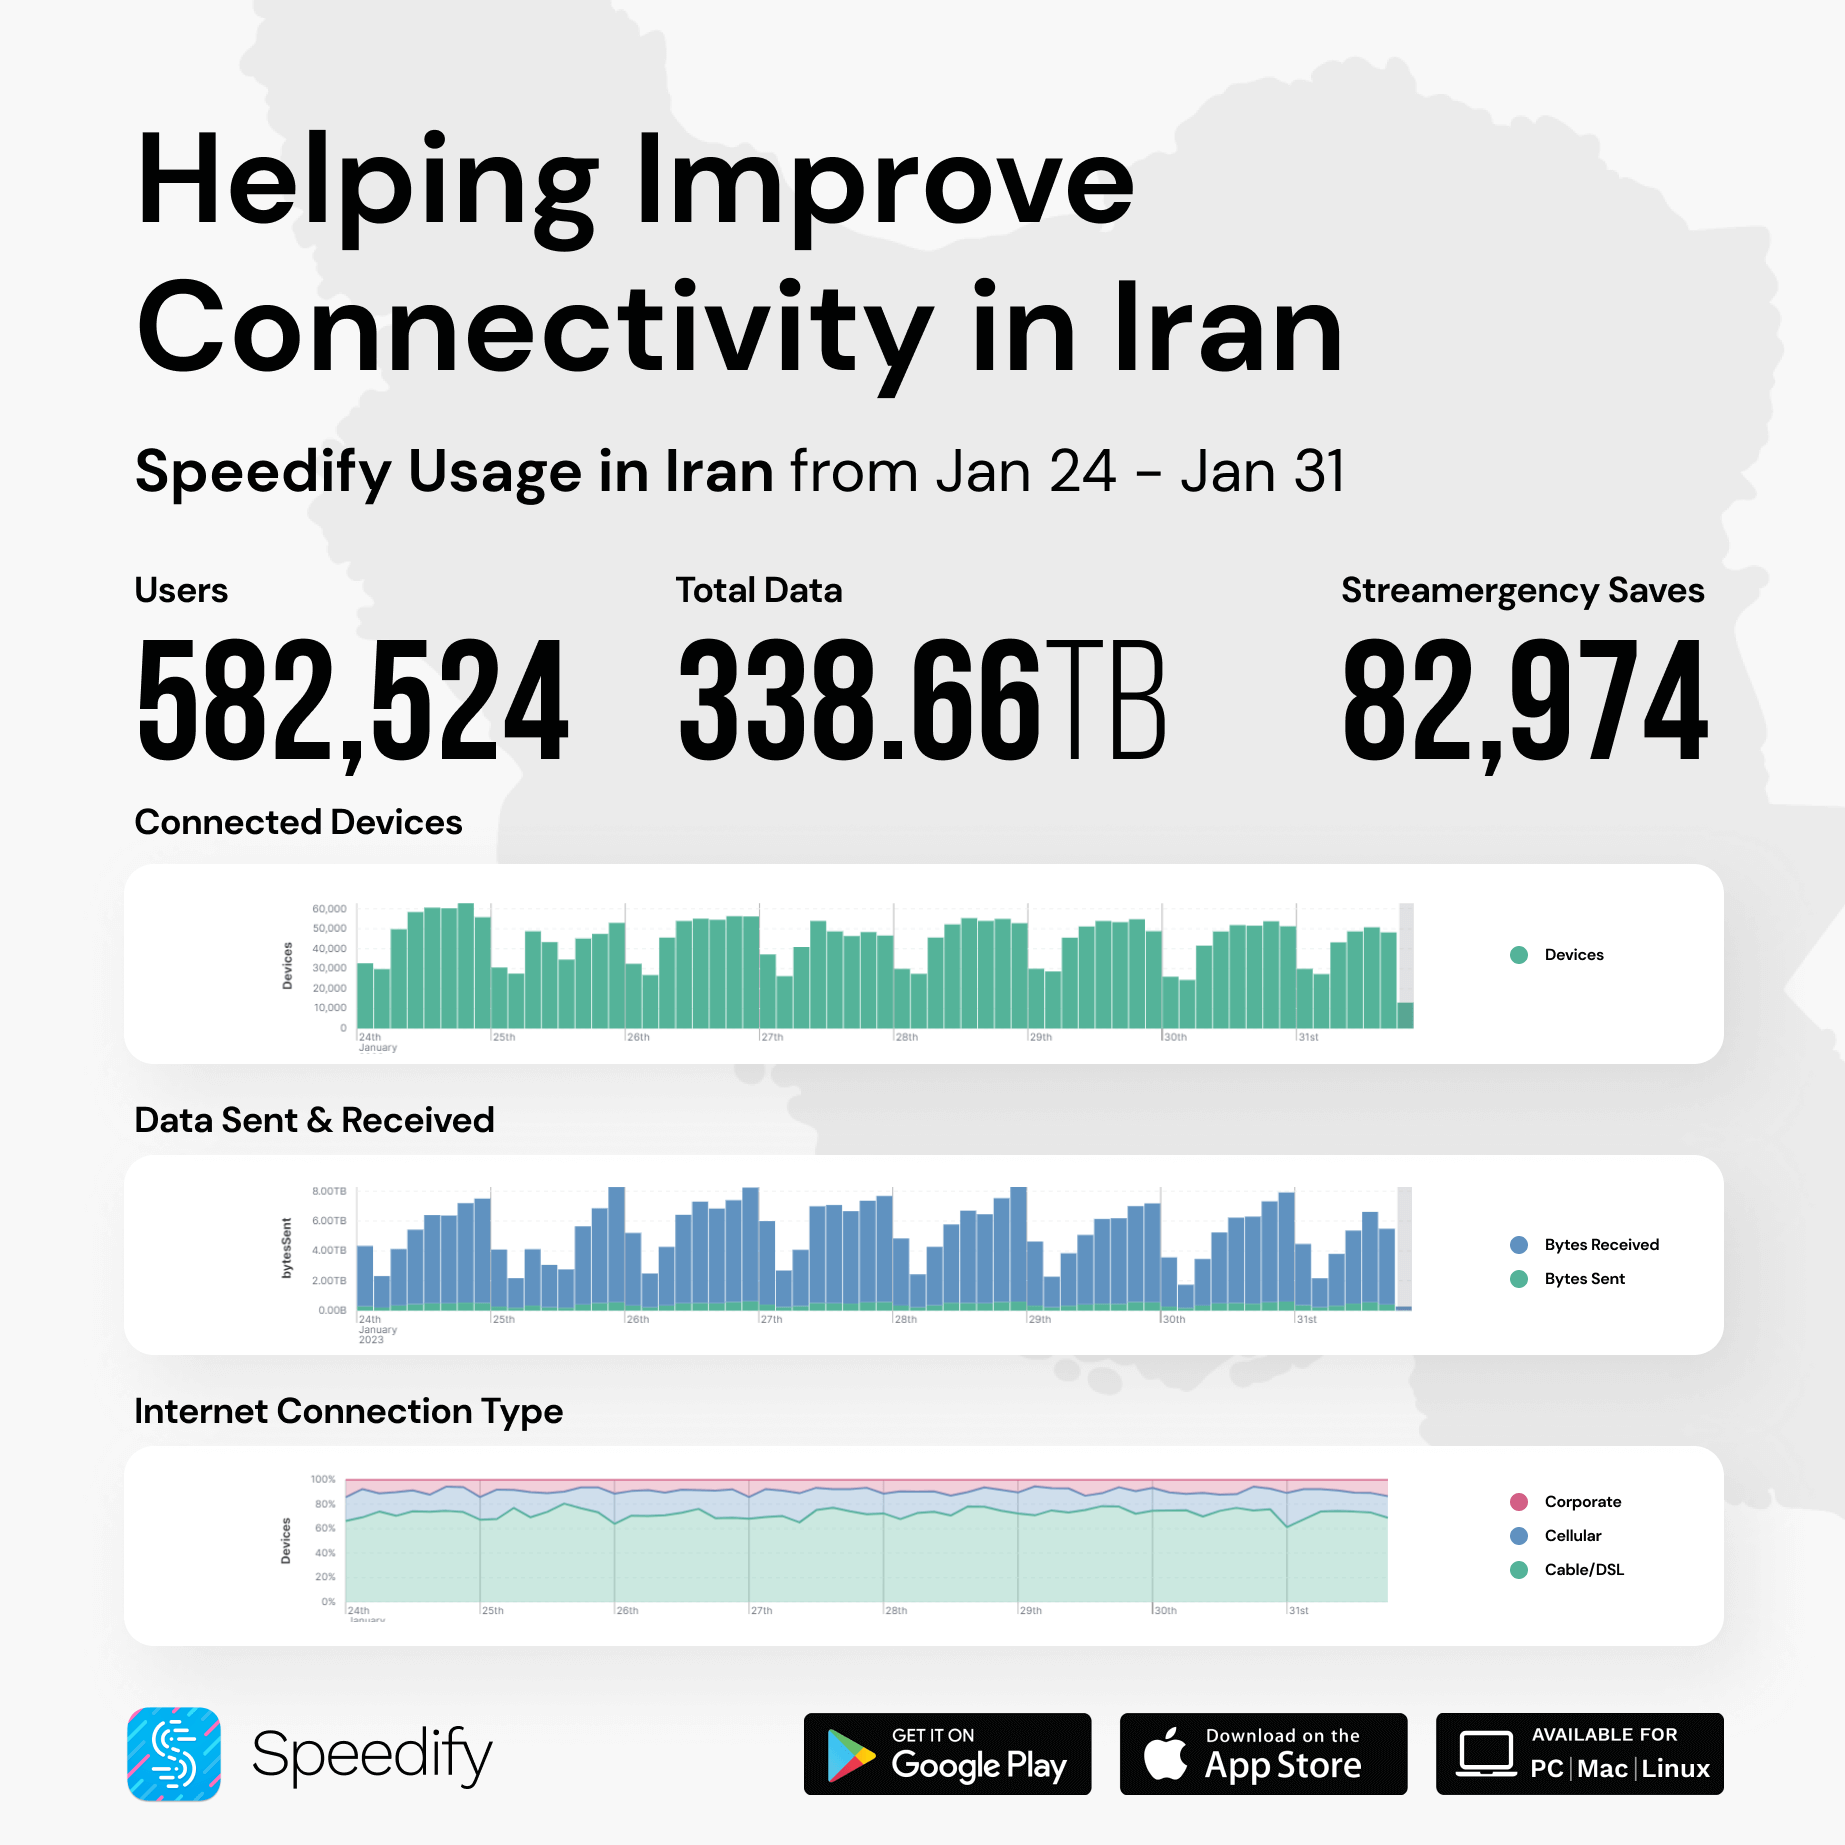 Jan 31 - Iran Internet usage for Speedify users